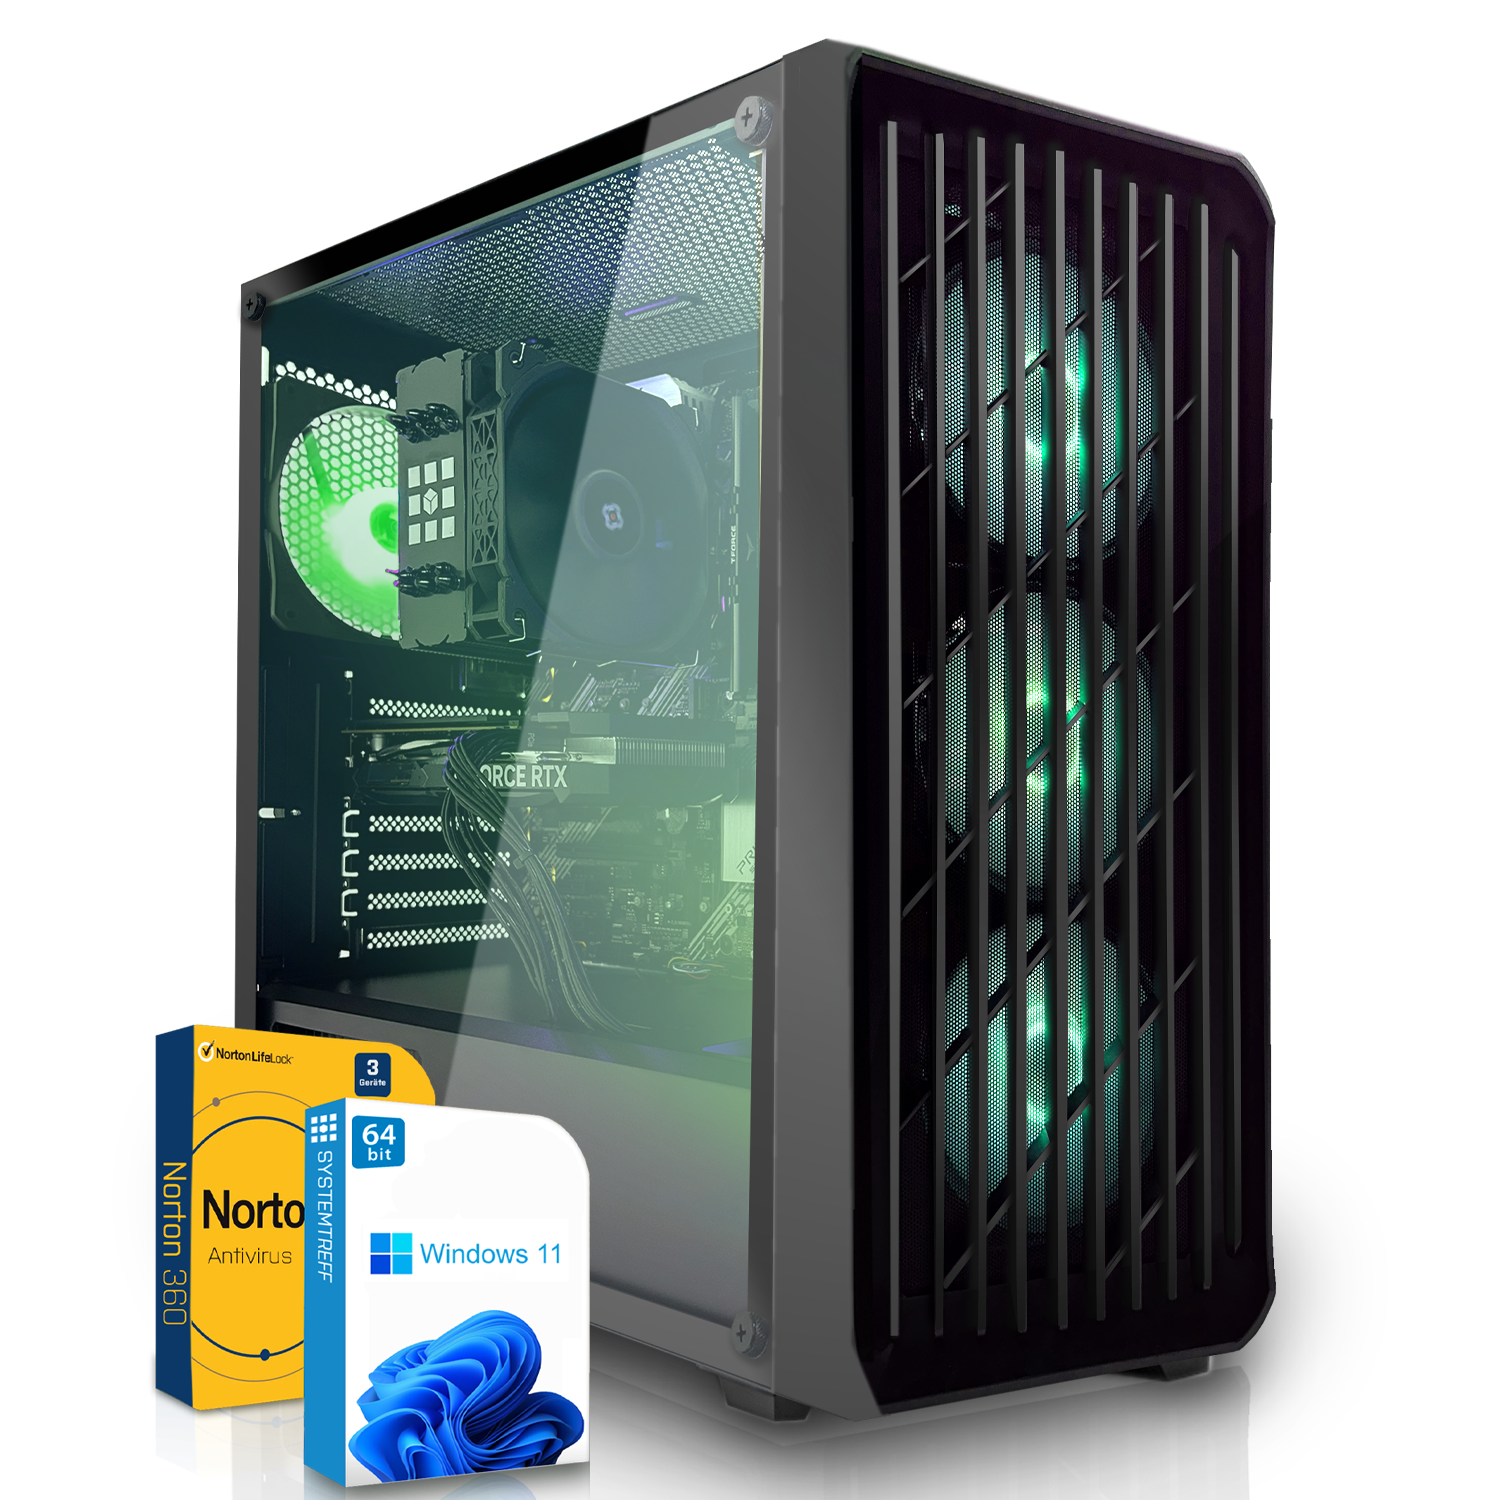 SYSTEMTREFF Pro Gaming AMD Ryzen 512 GB AMD RAM, 4500, GB GeForce 5 RTX™ mit 16 Ryzen™ Prozessor, Pro, 5 4060 Windows PC Gaming 11 NVIDIA mSSD